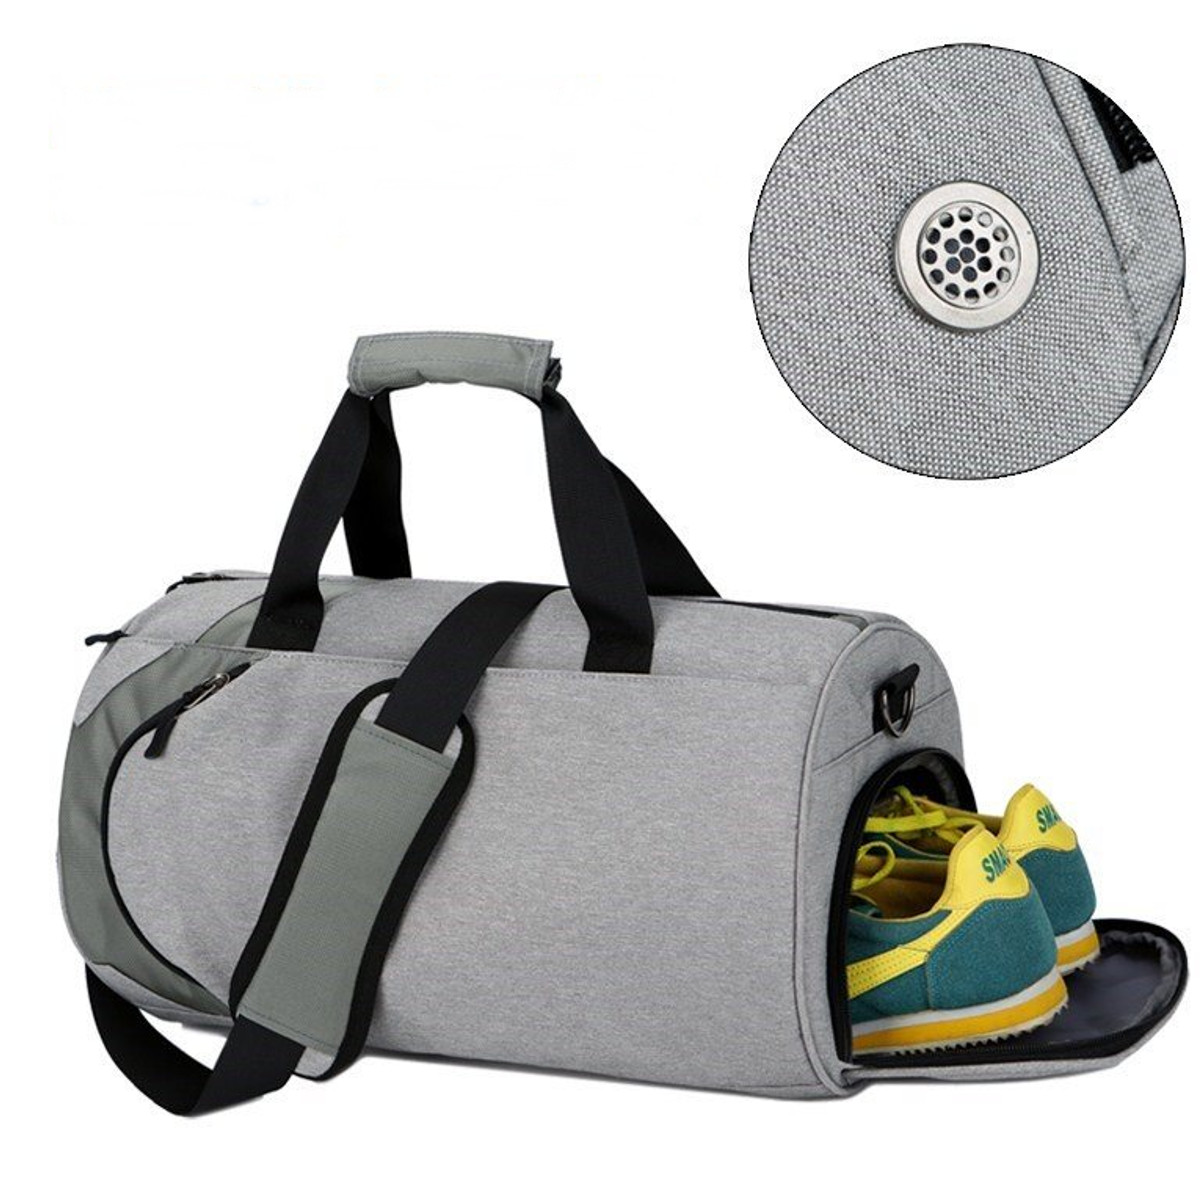 Waterproof-Multifunctional-Yoga-Bag-Outdoor-Sport-Travel-Fitness-Gym-Trainning-Handbag-Luggage-1518296-4